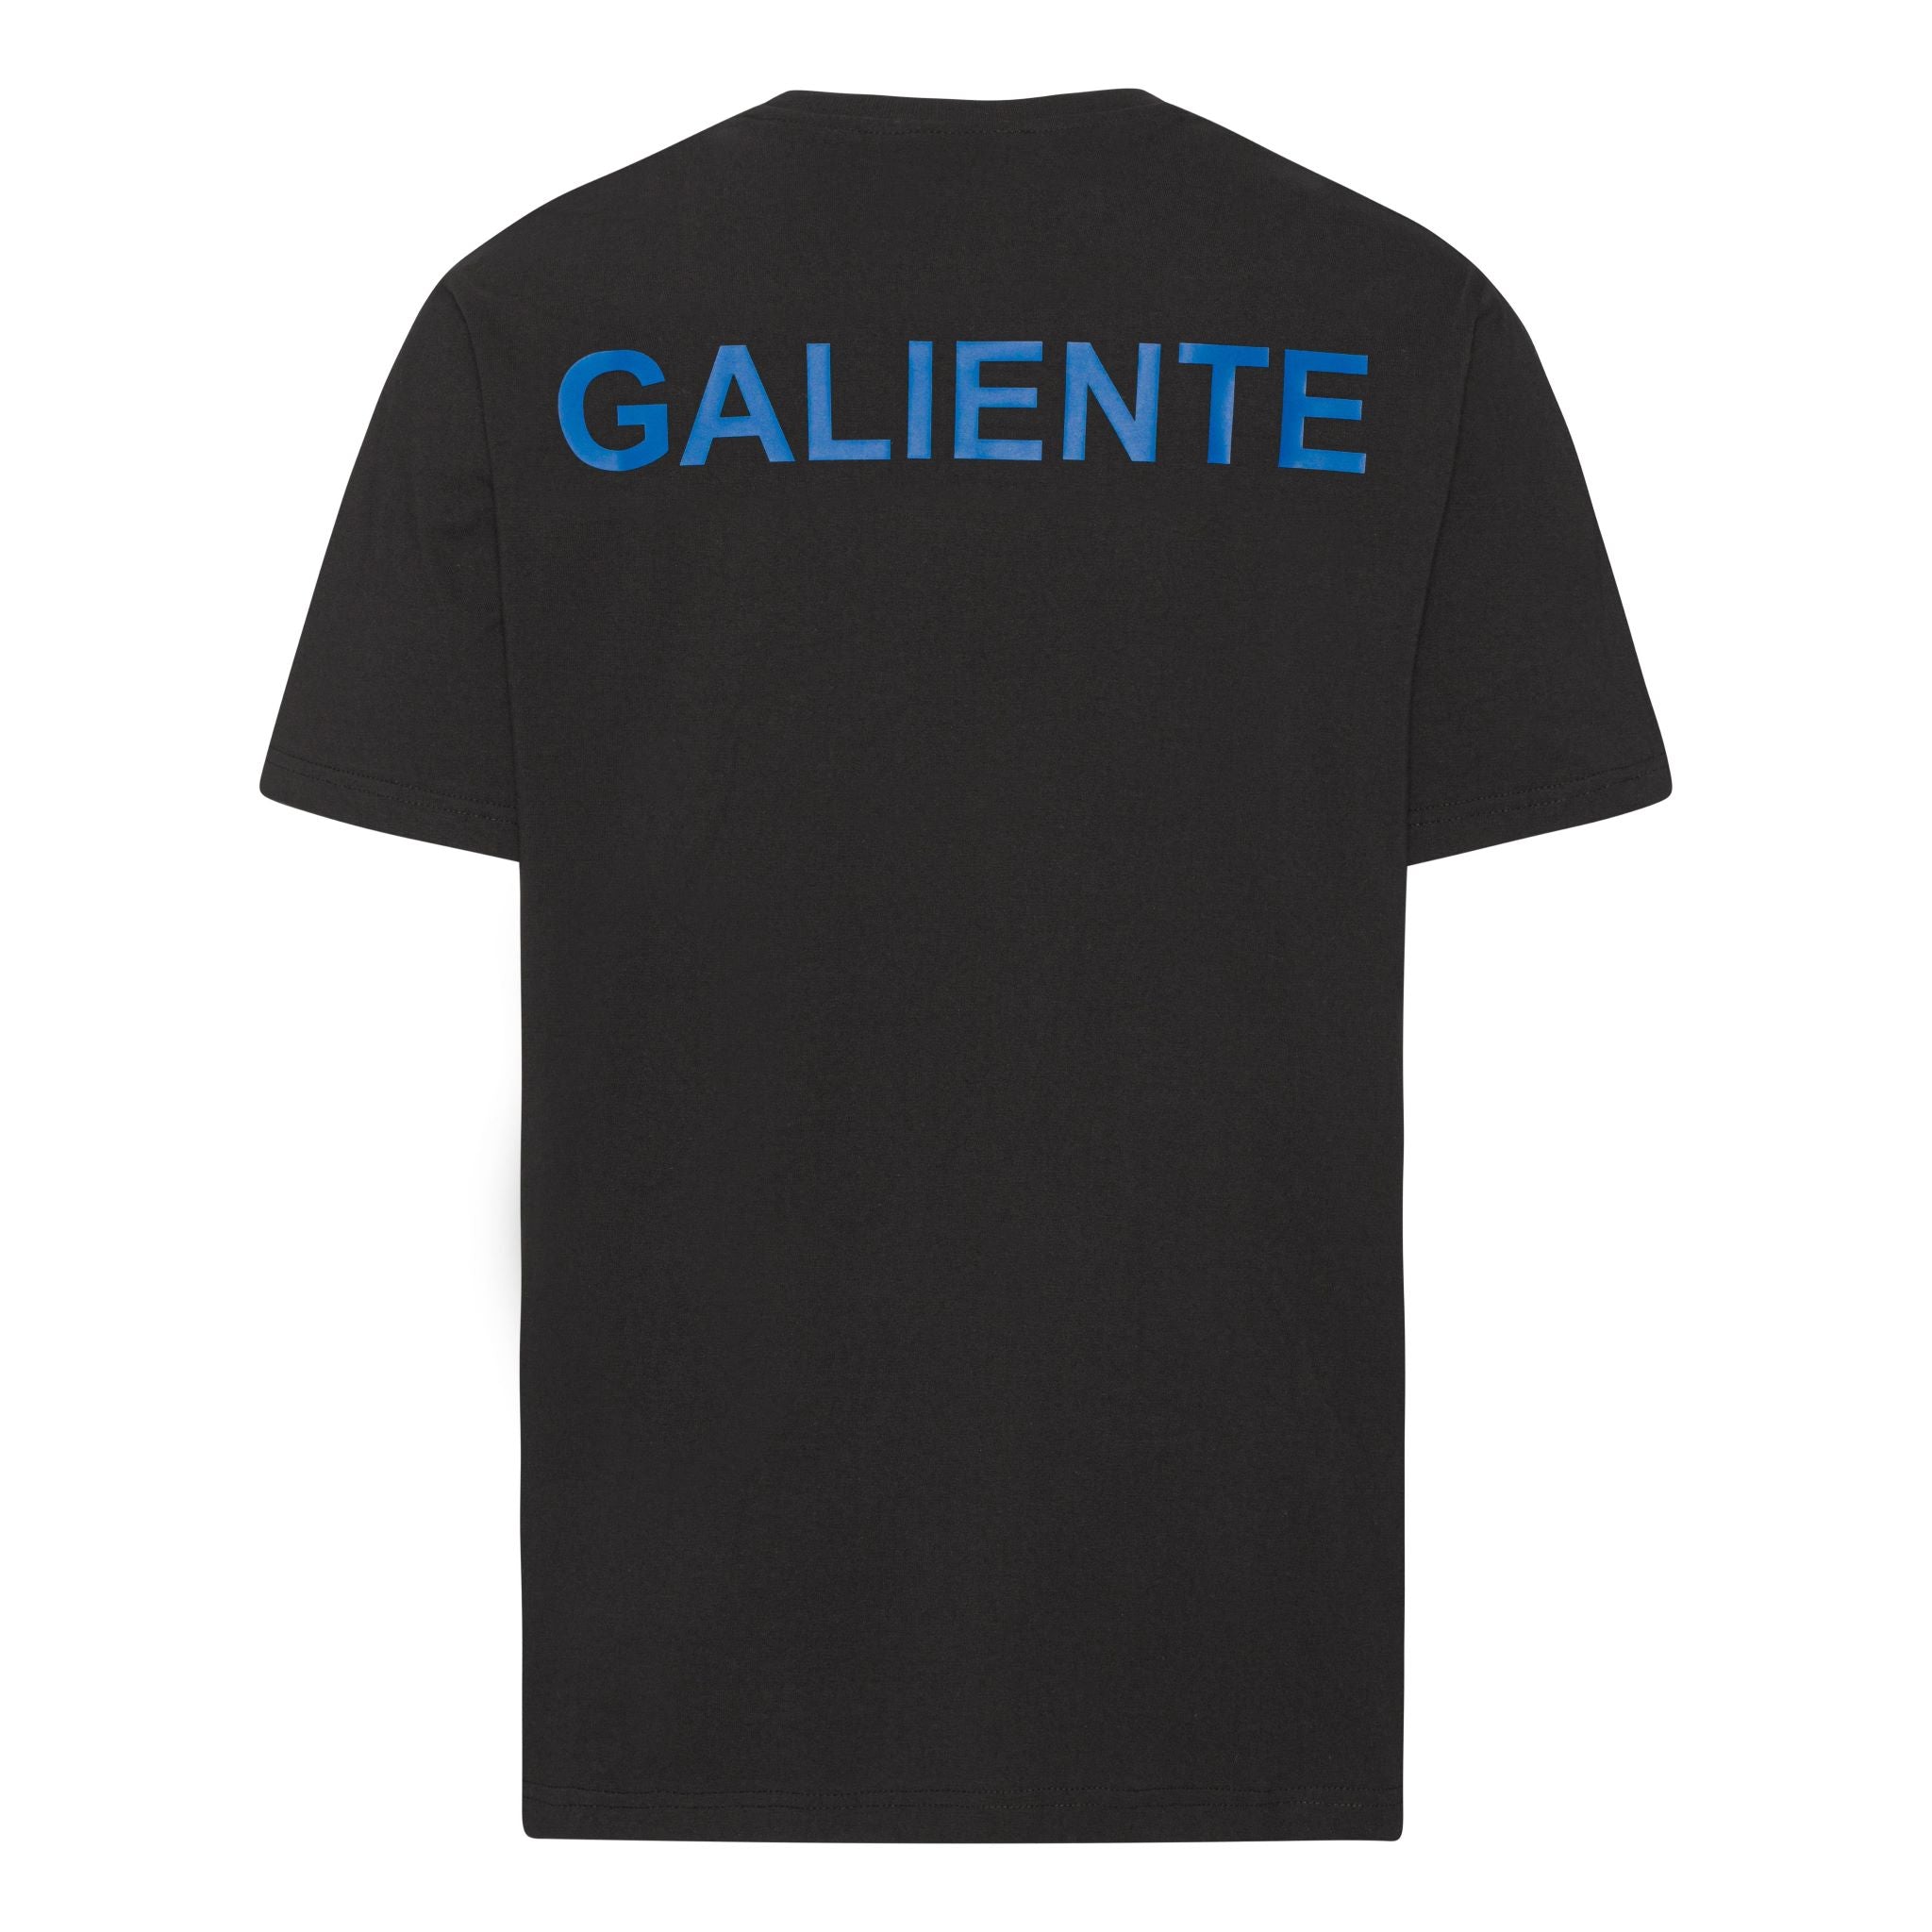 Oversize black T-shirt with blue logo print